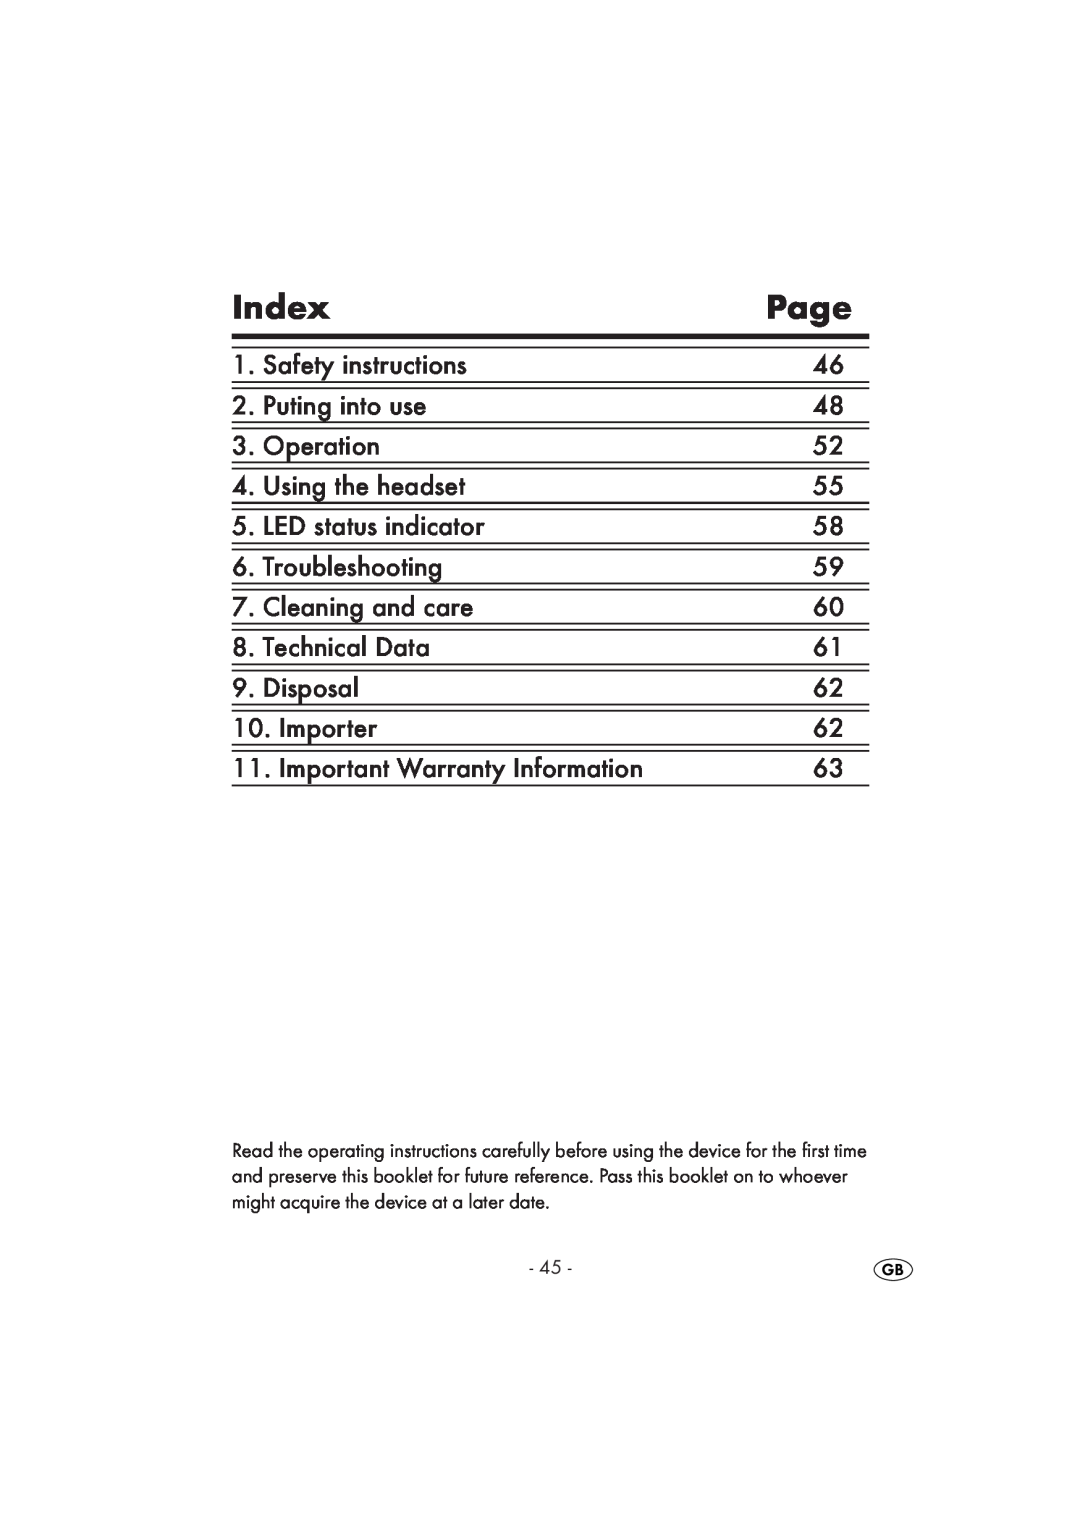 Kompernass KH 2356 manual Index, Page 